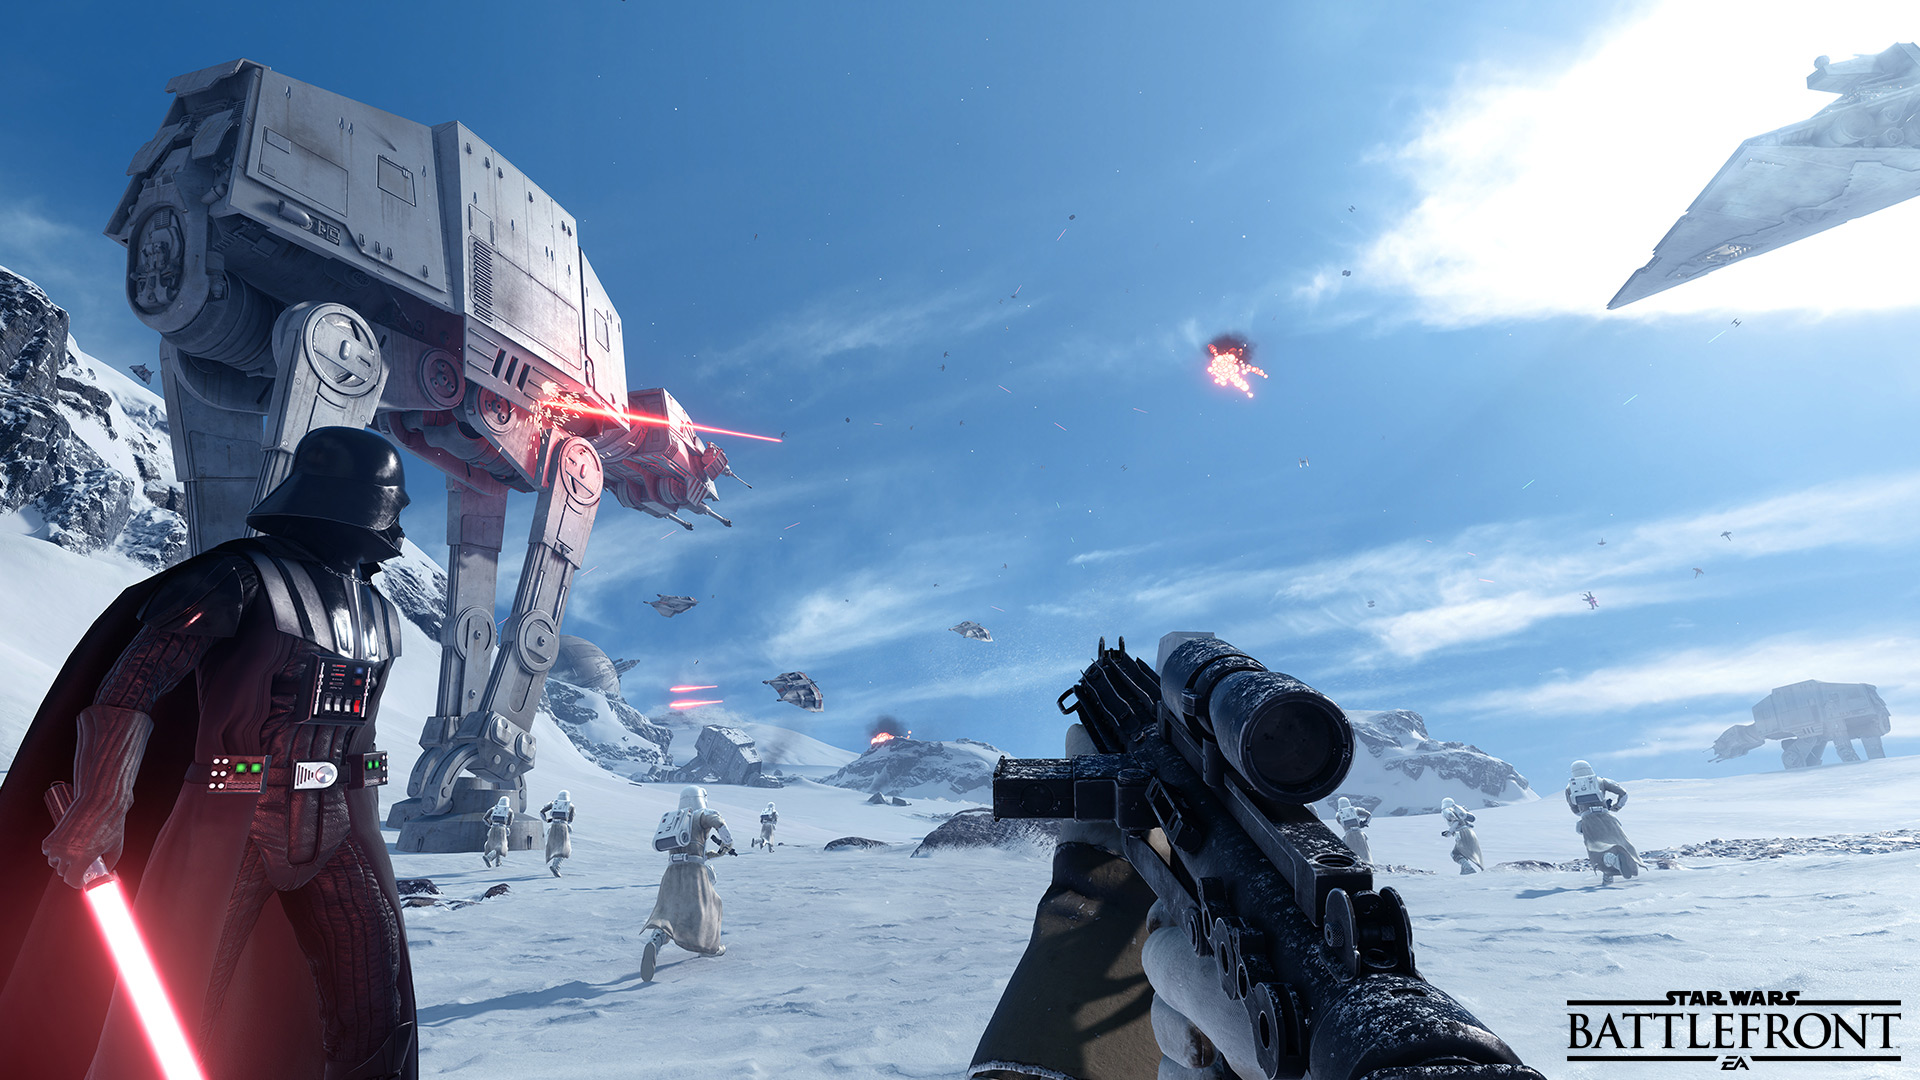 EA and Dice unveil Battlefield 4 Premium Edition, will cost $50